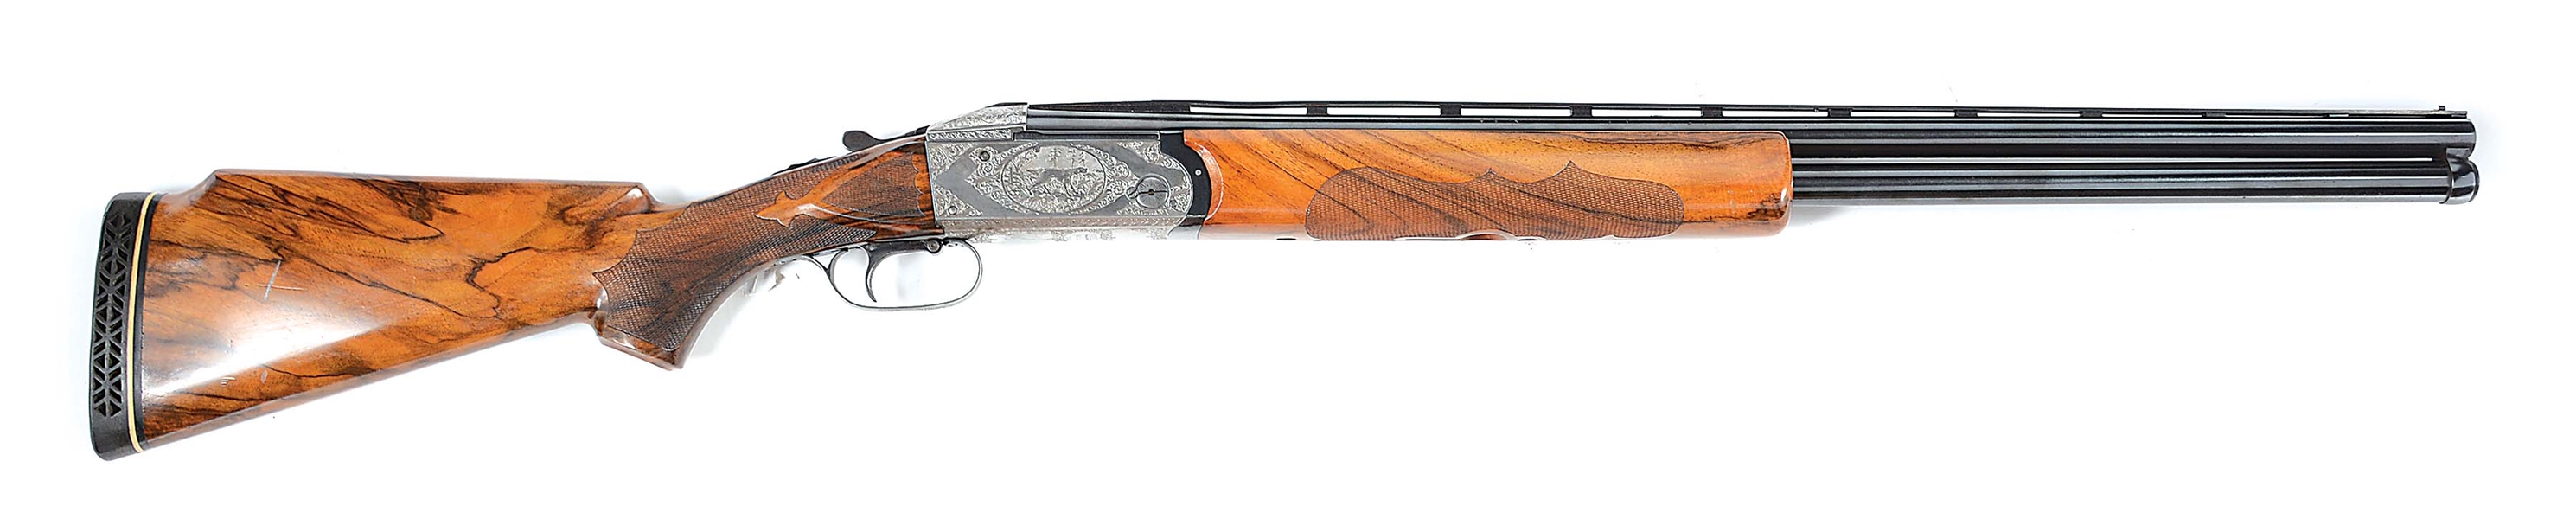 remington model 32